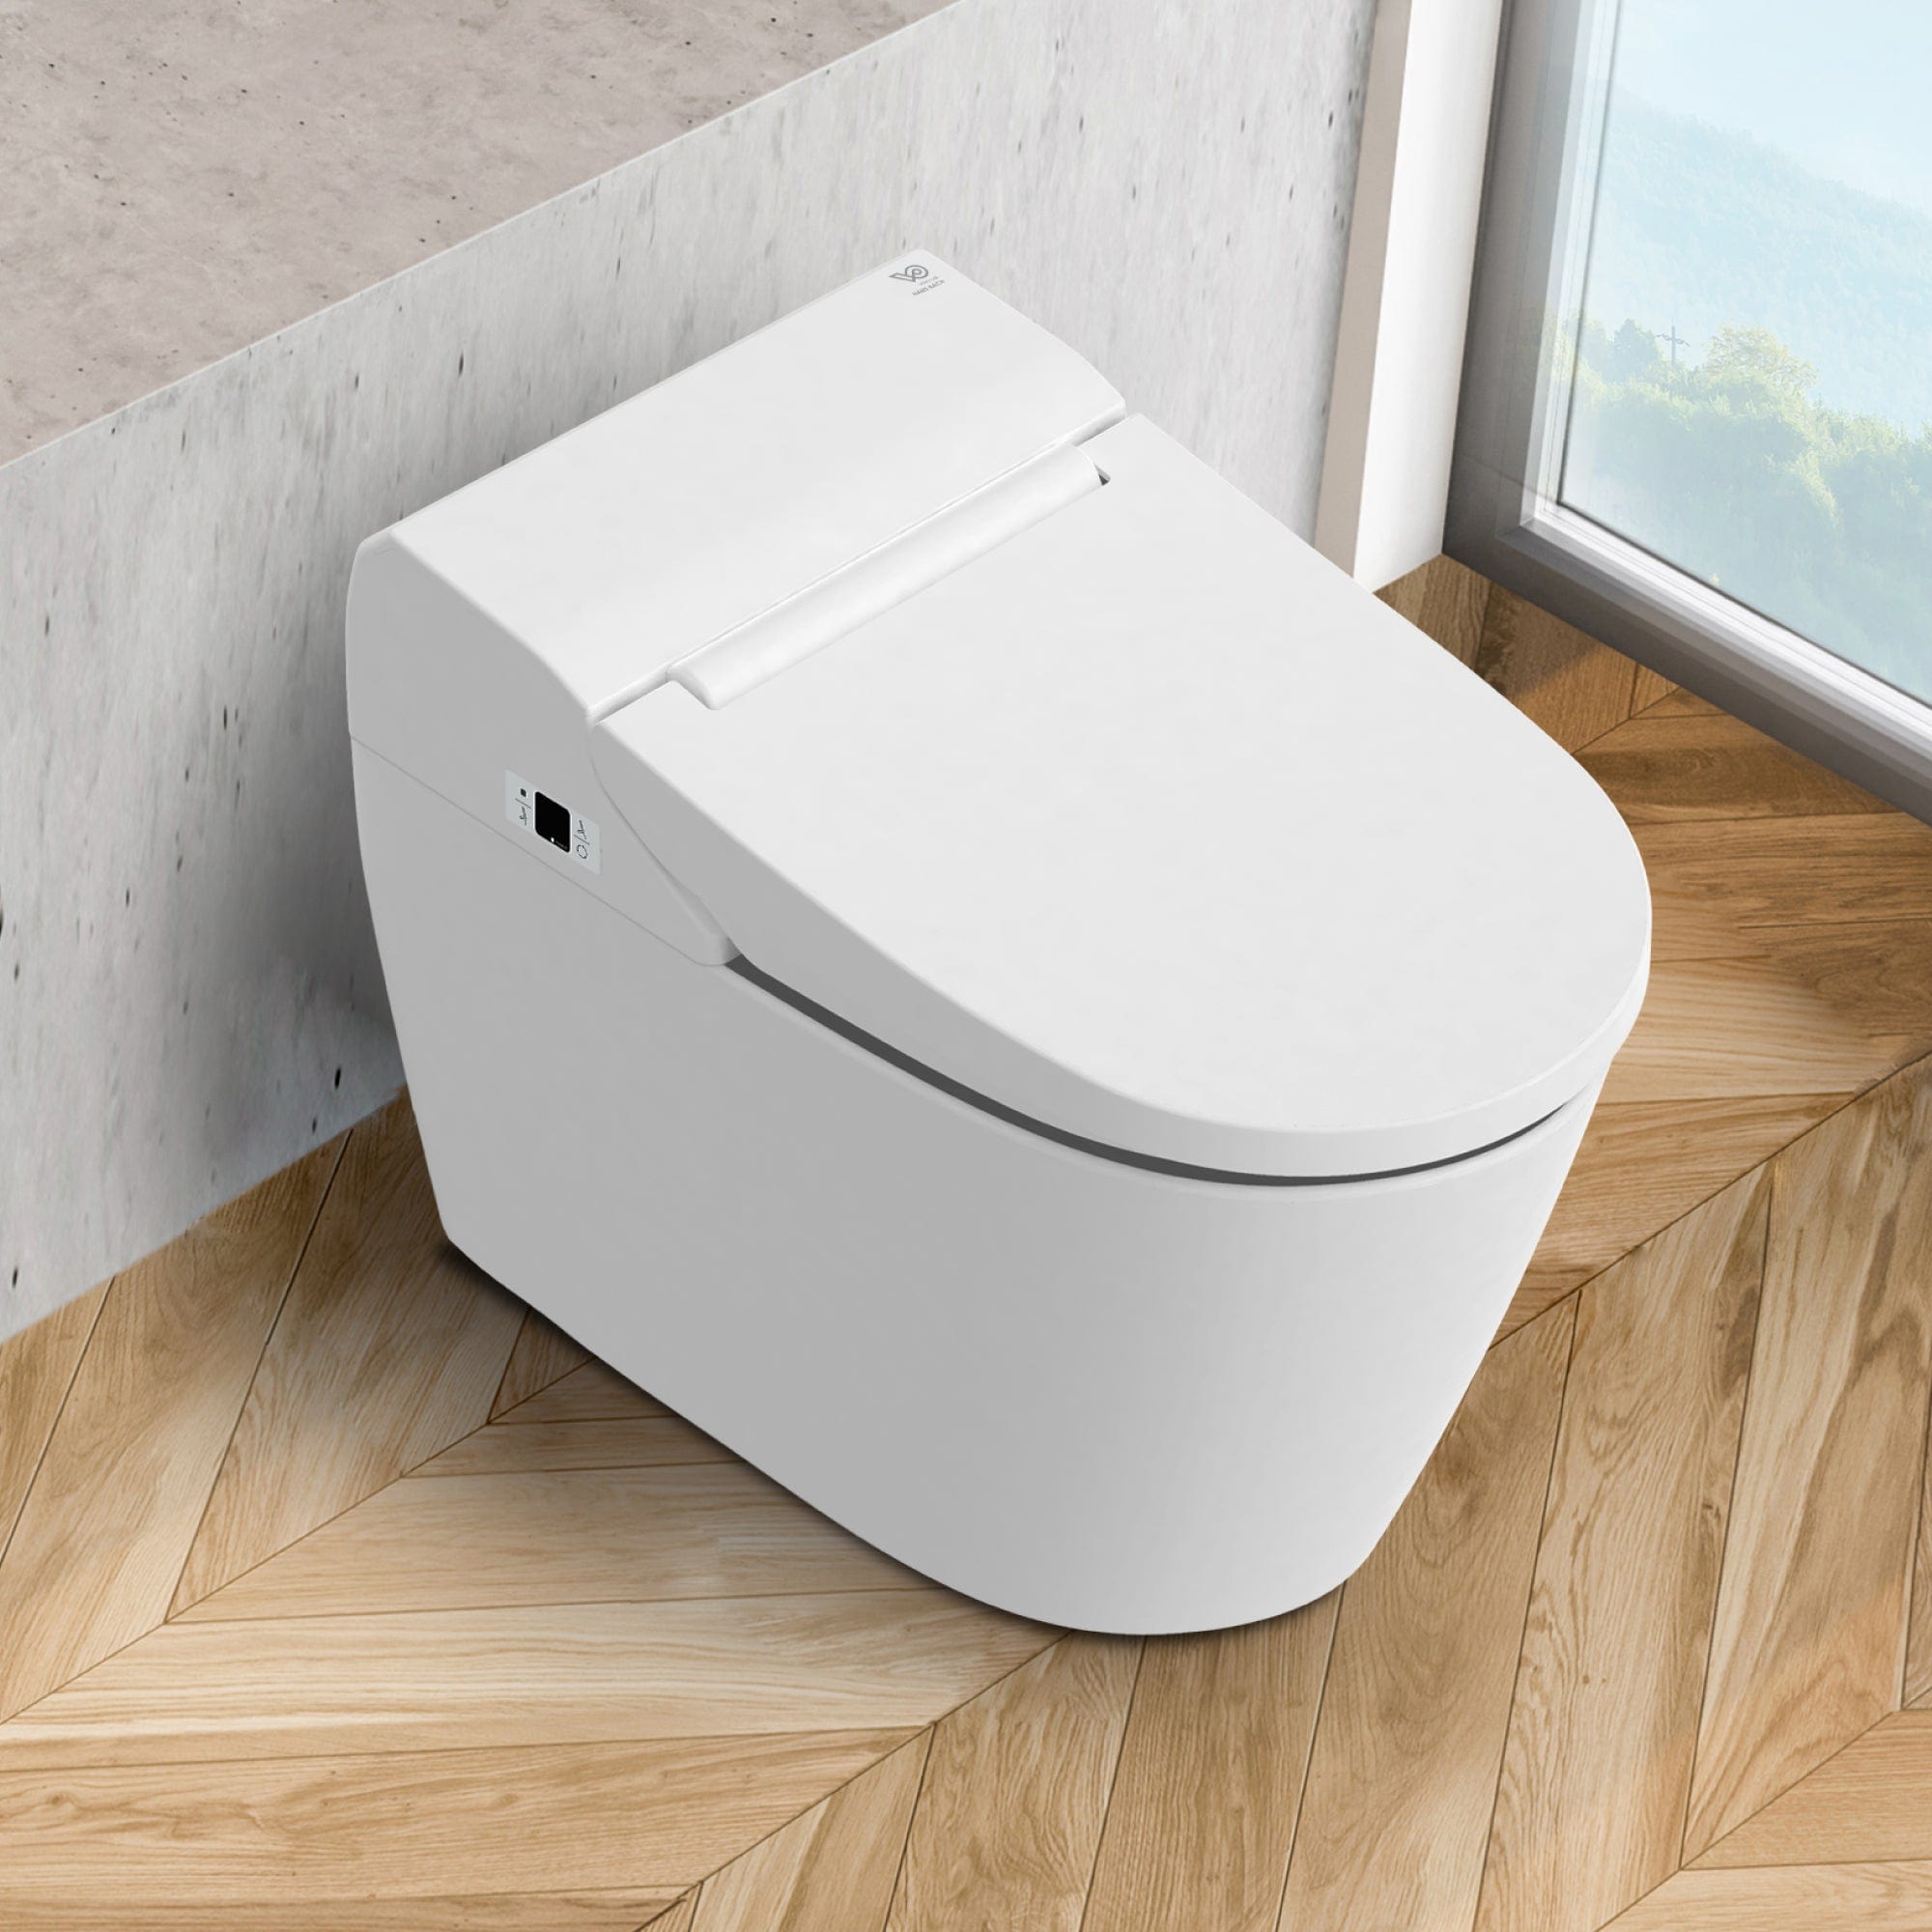 VOVO Integrated Bidet Toilet VOVO Stylement TCB-8100W Integrated Smart Bidet Toilet